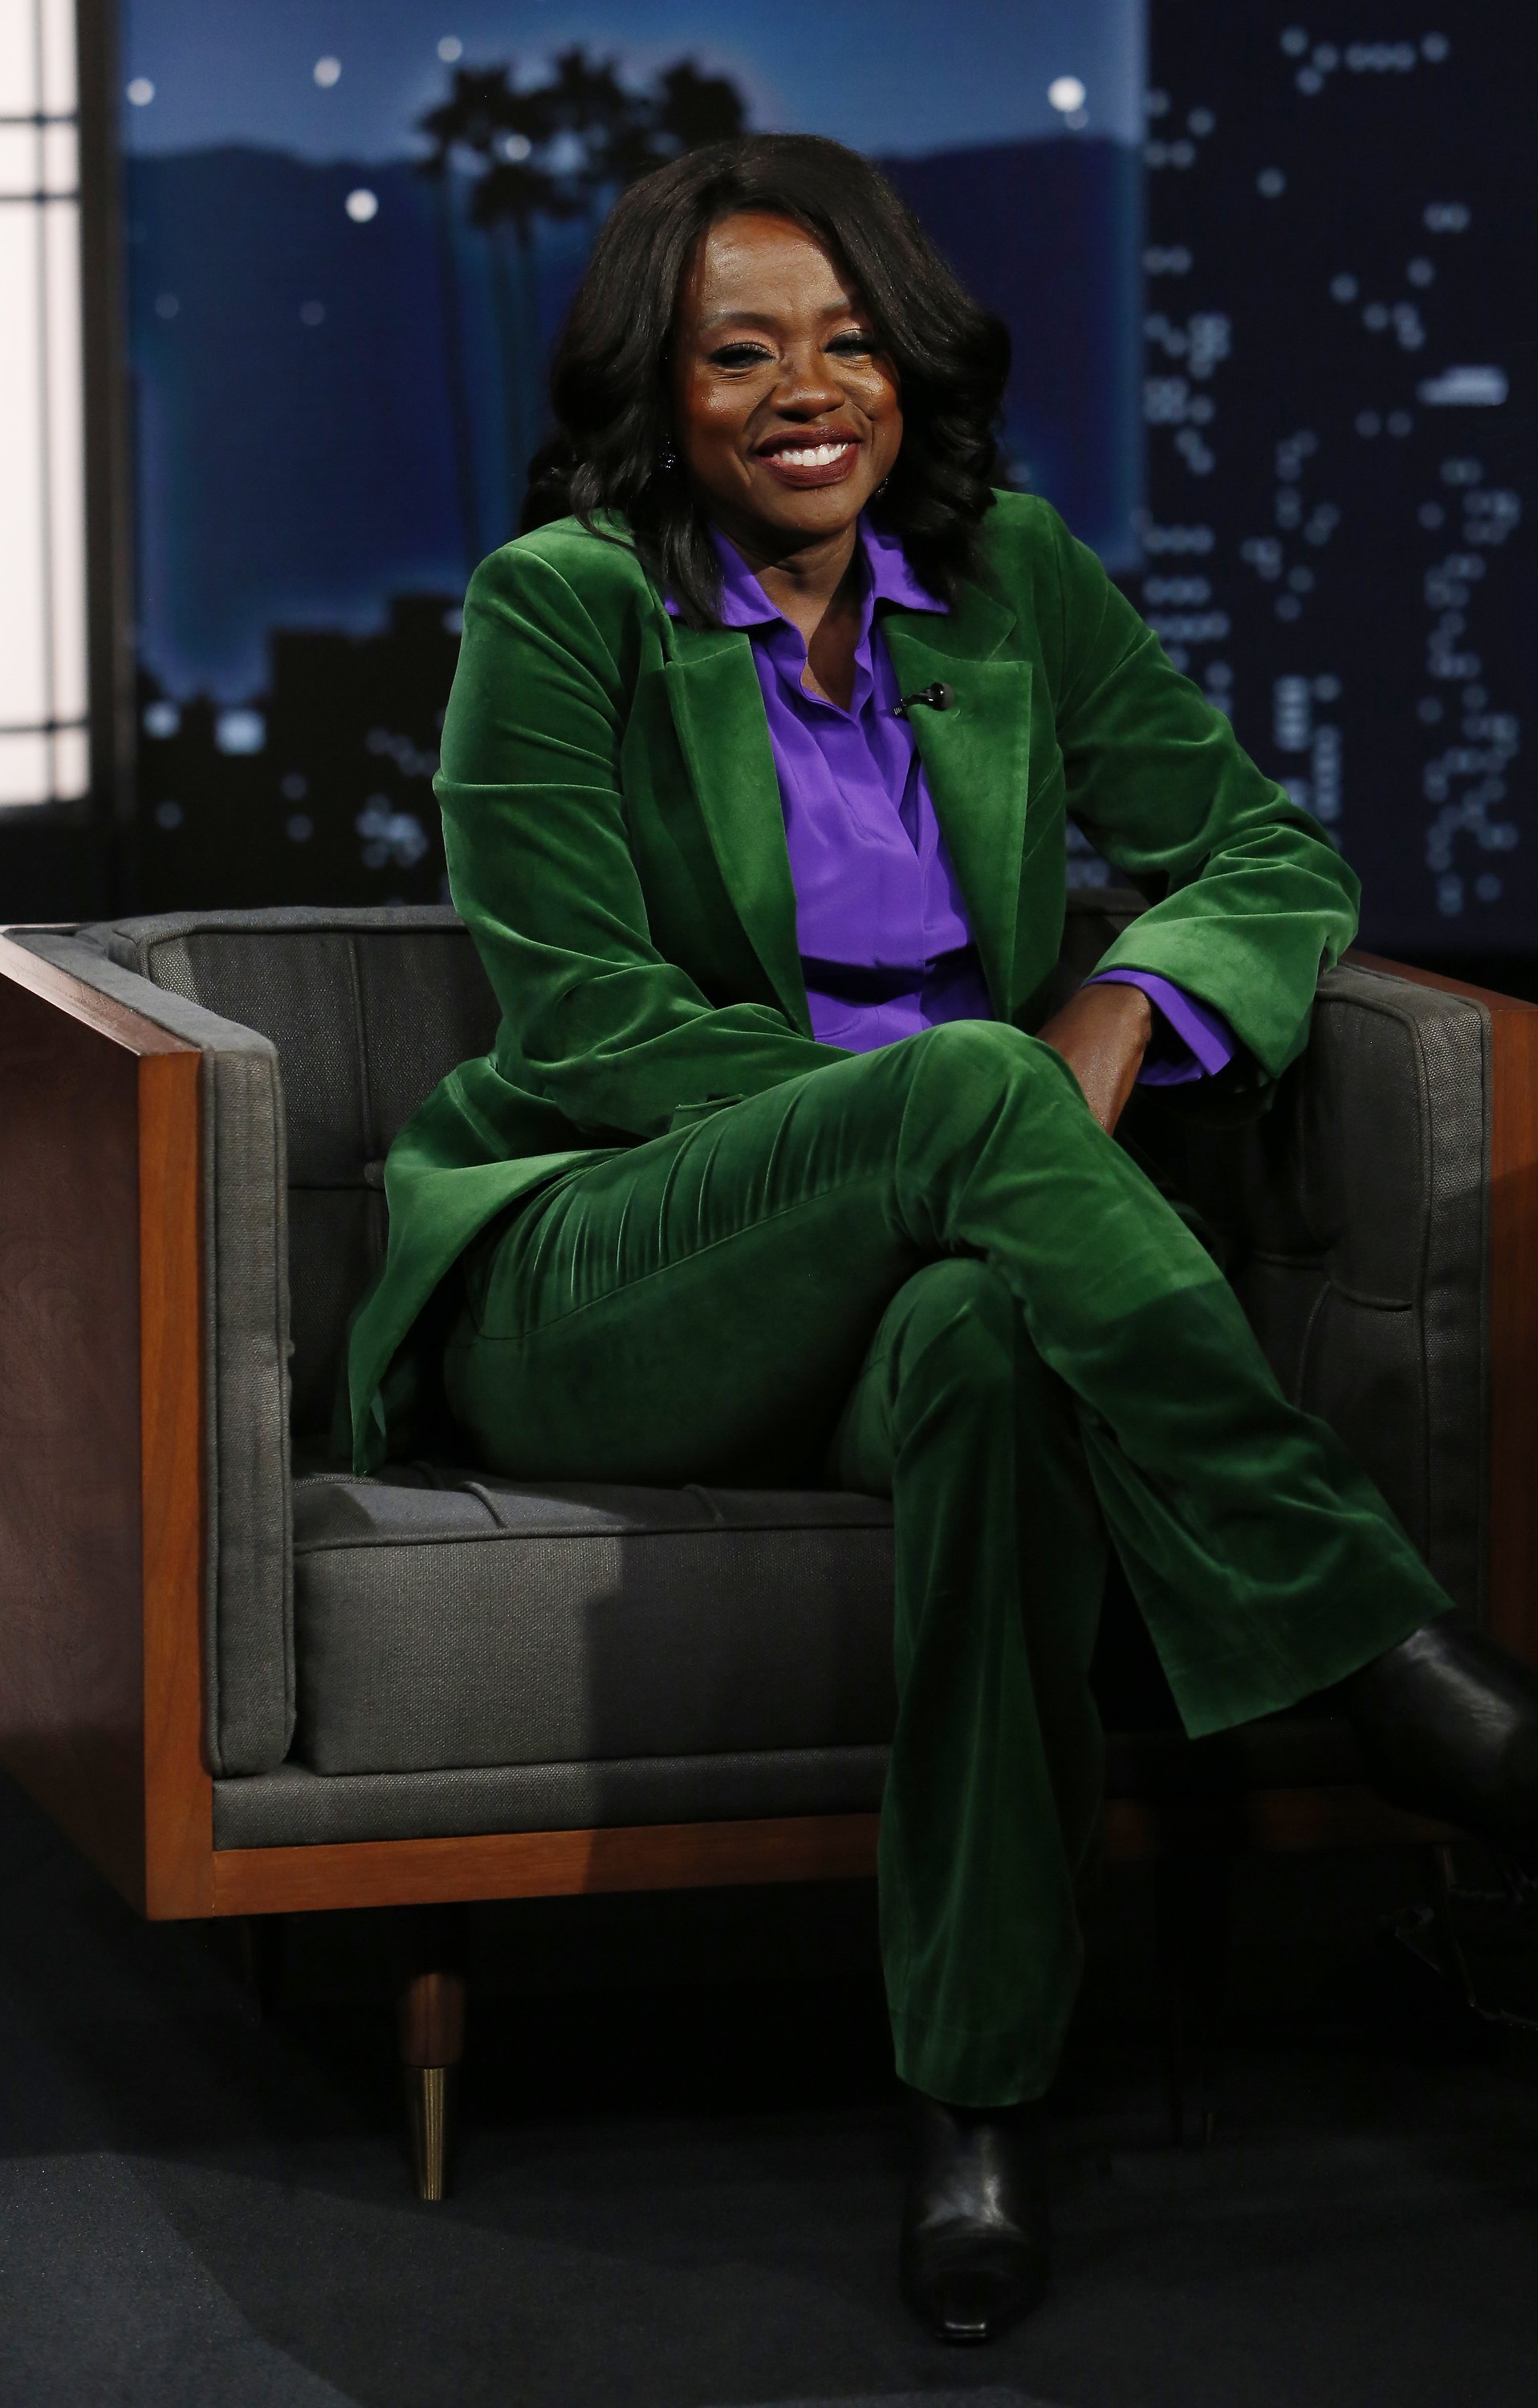 Viola Davis on "Jimmy Kimmel Live!" on April 11, 2022. | Source: Randy Holmes/ABC/Getty Images